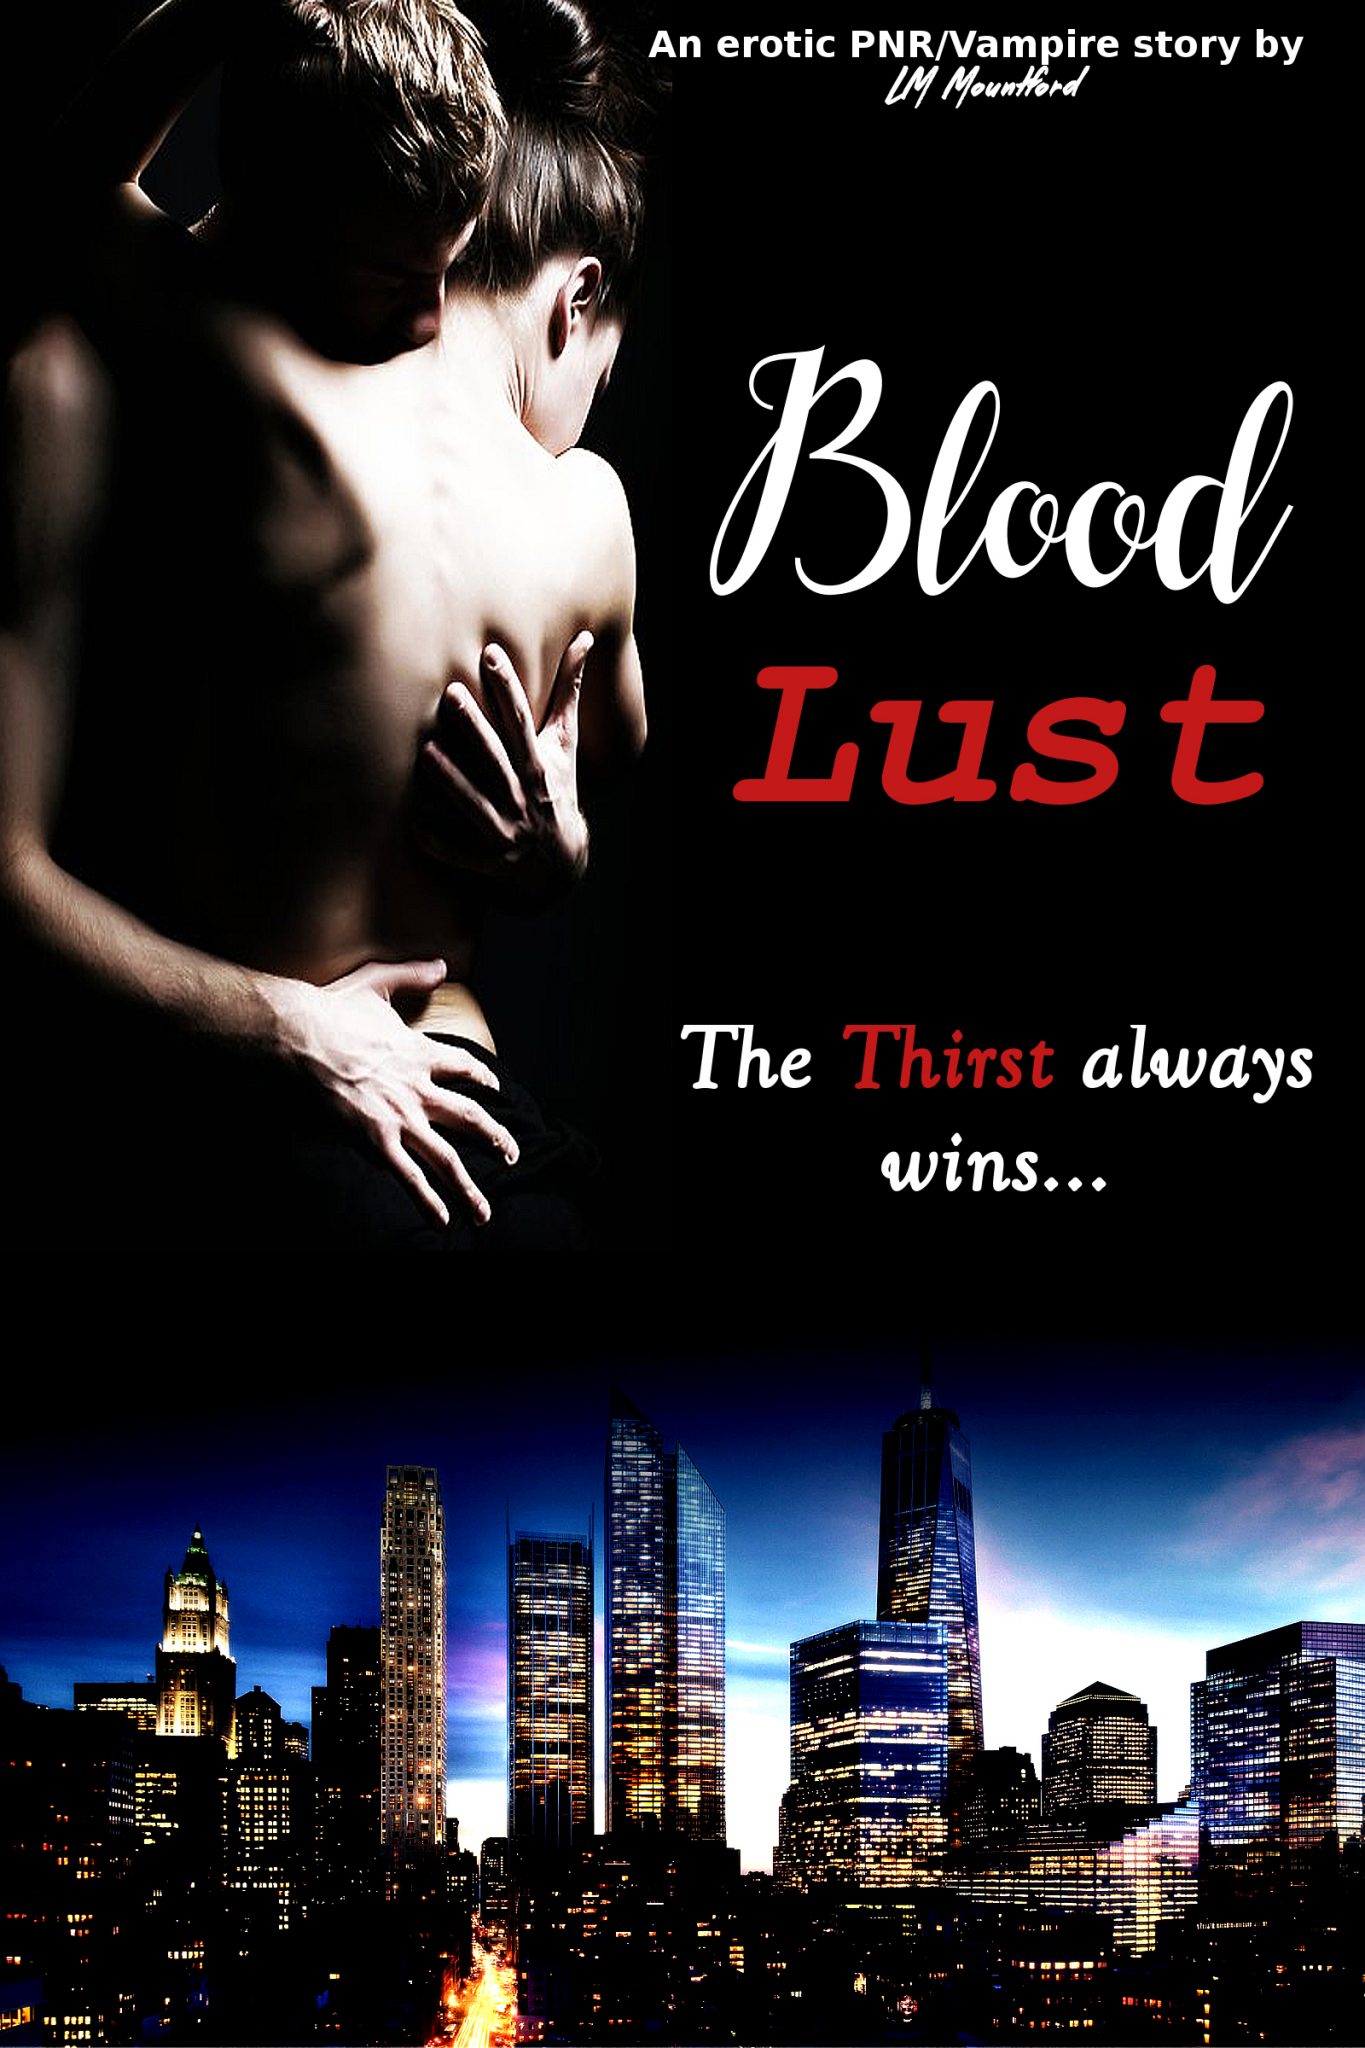 blood lust first 48